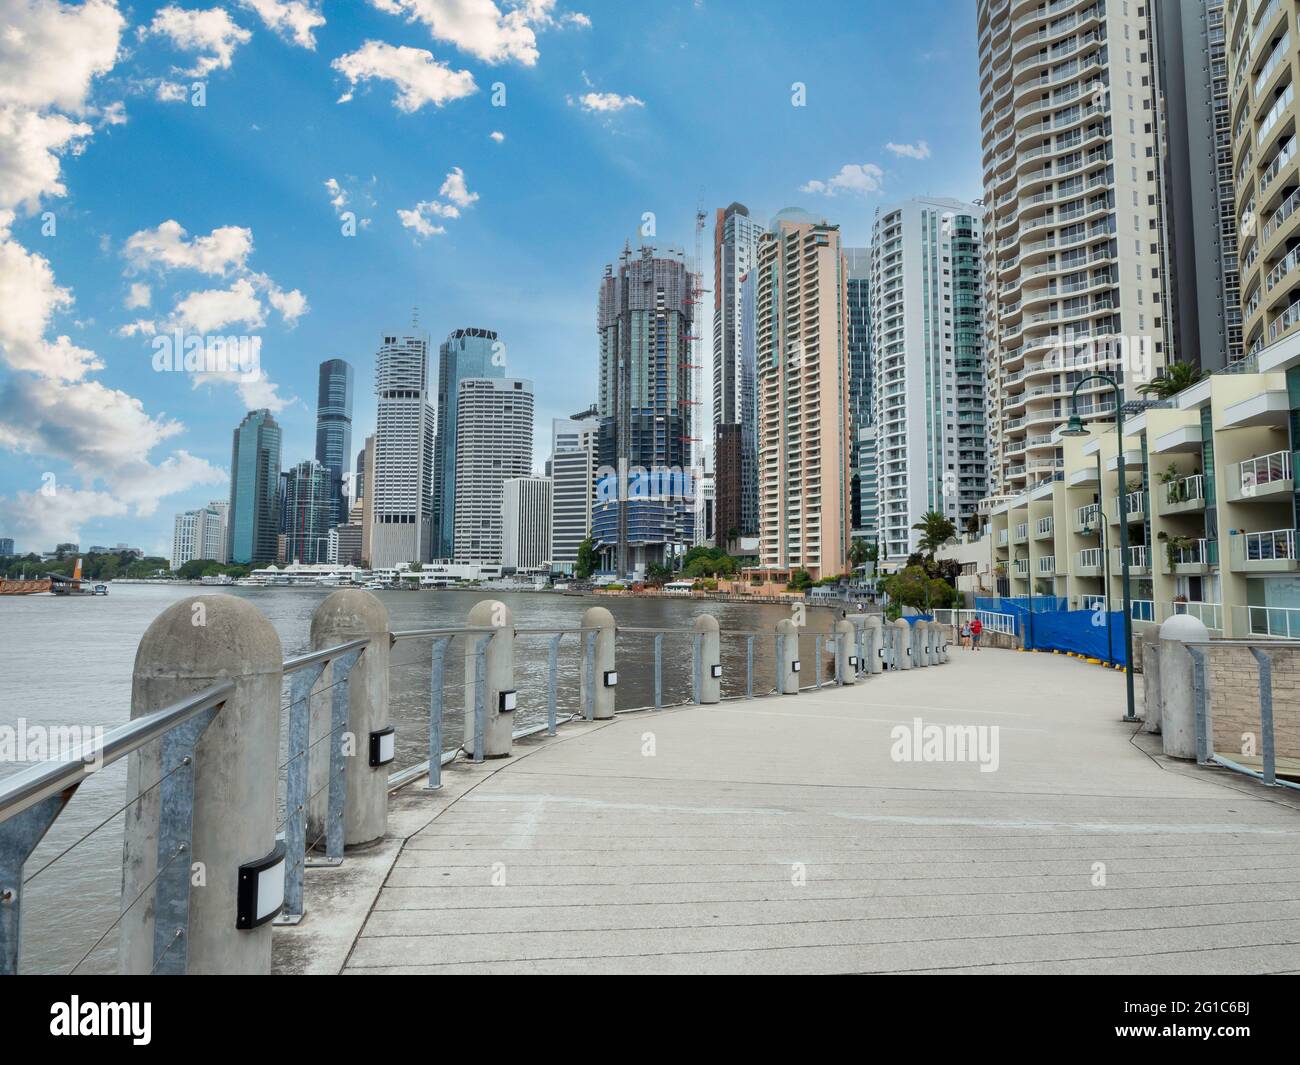 Riverwalk in the city of Brisbane, Apartment buildings, offices, hotels, pedestrian path. Brisbane, Queensland, Australia. Stock Photo